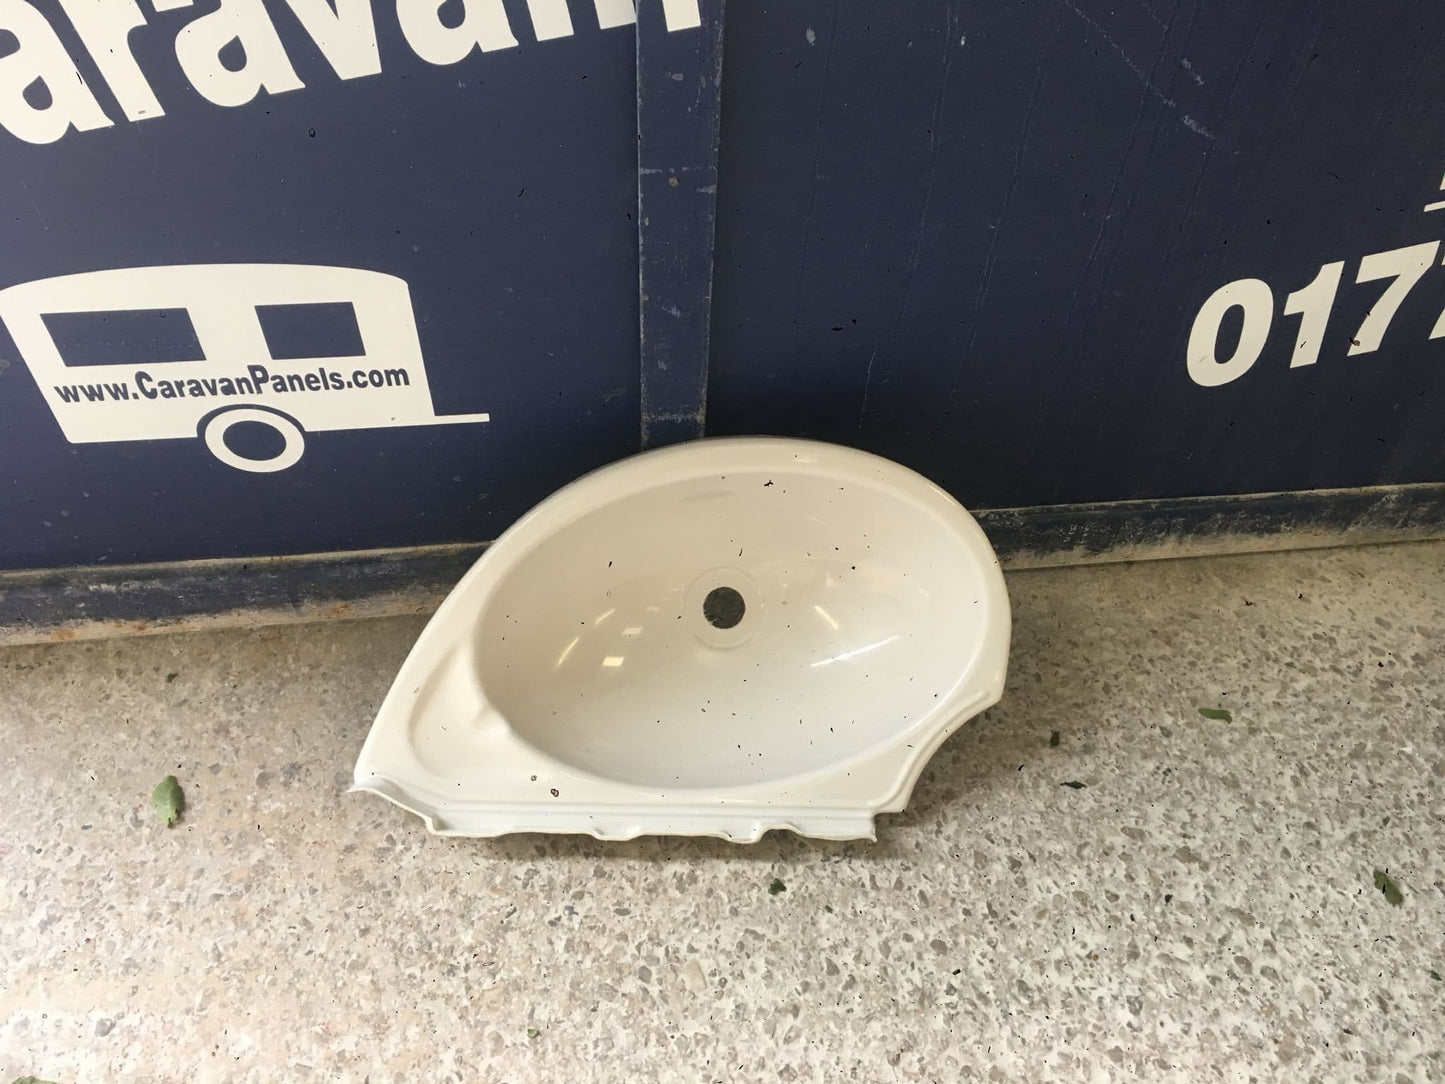 Swift caravan vanity sink 017